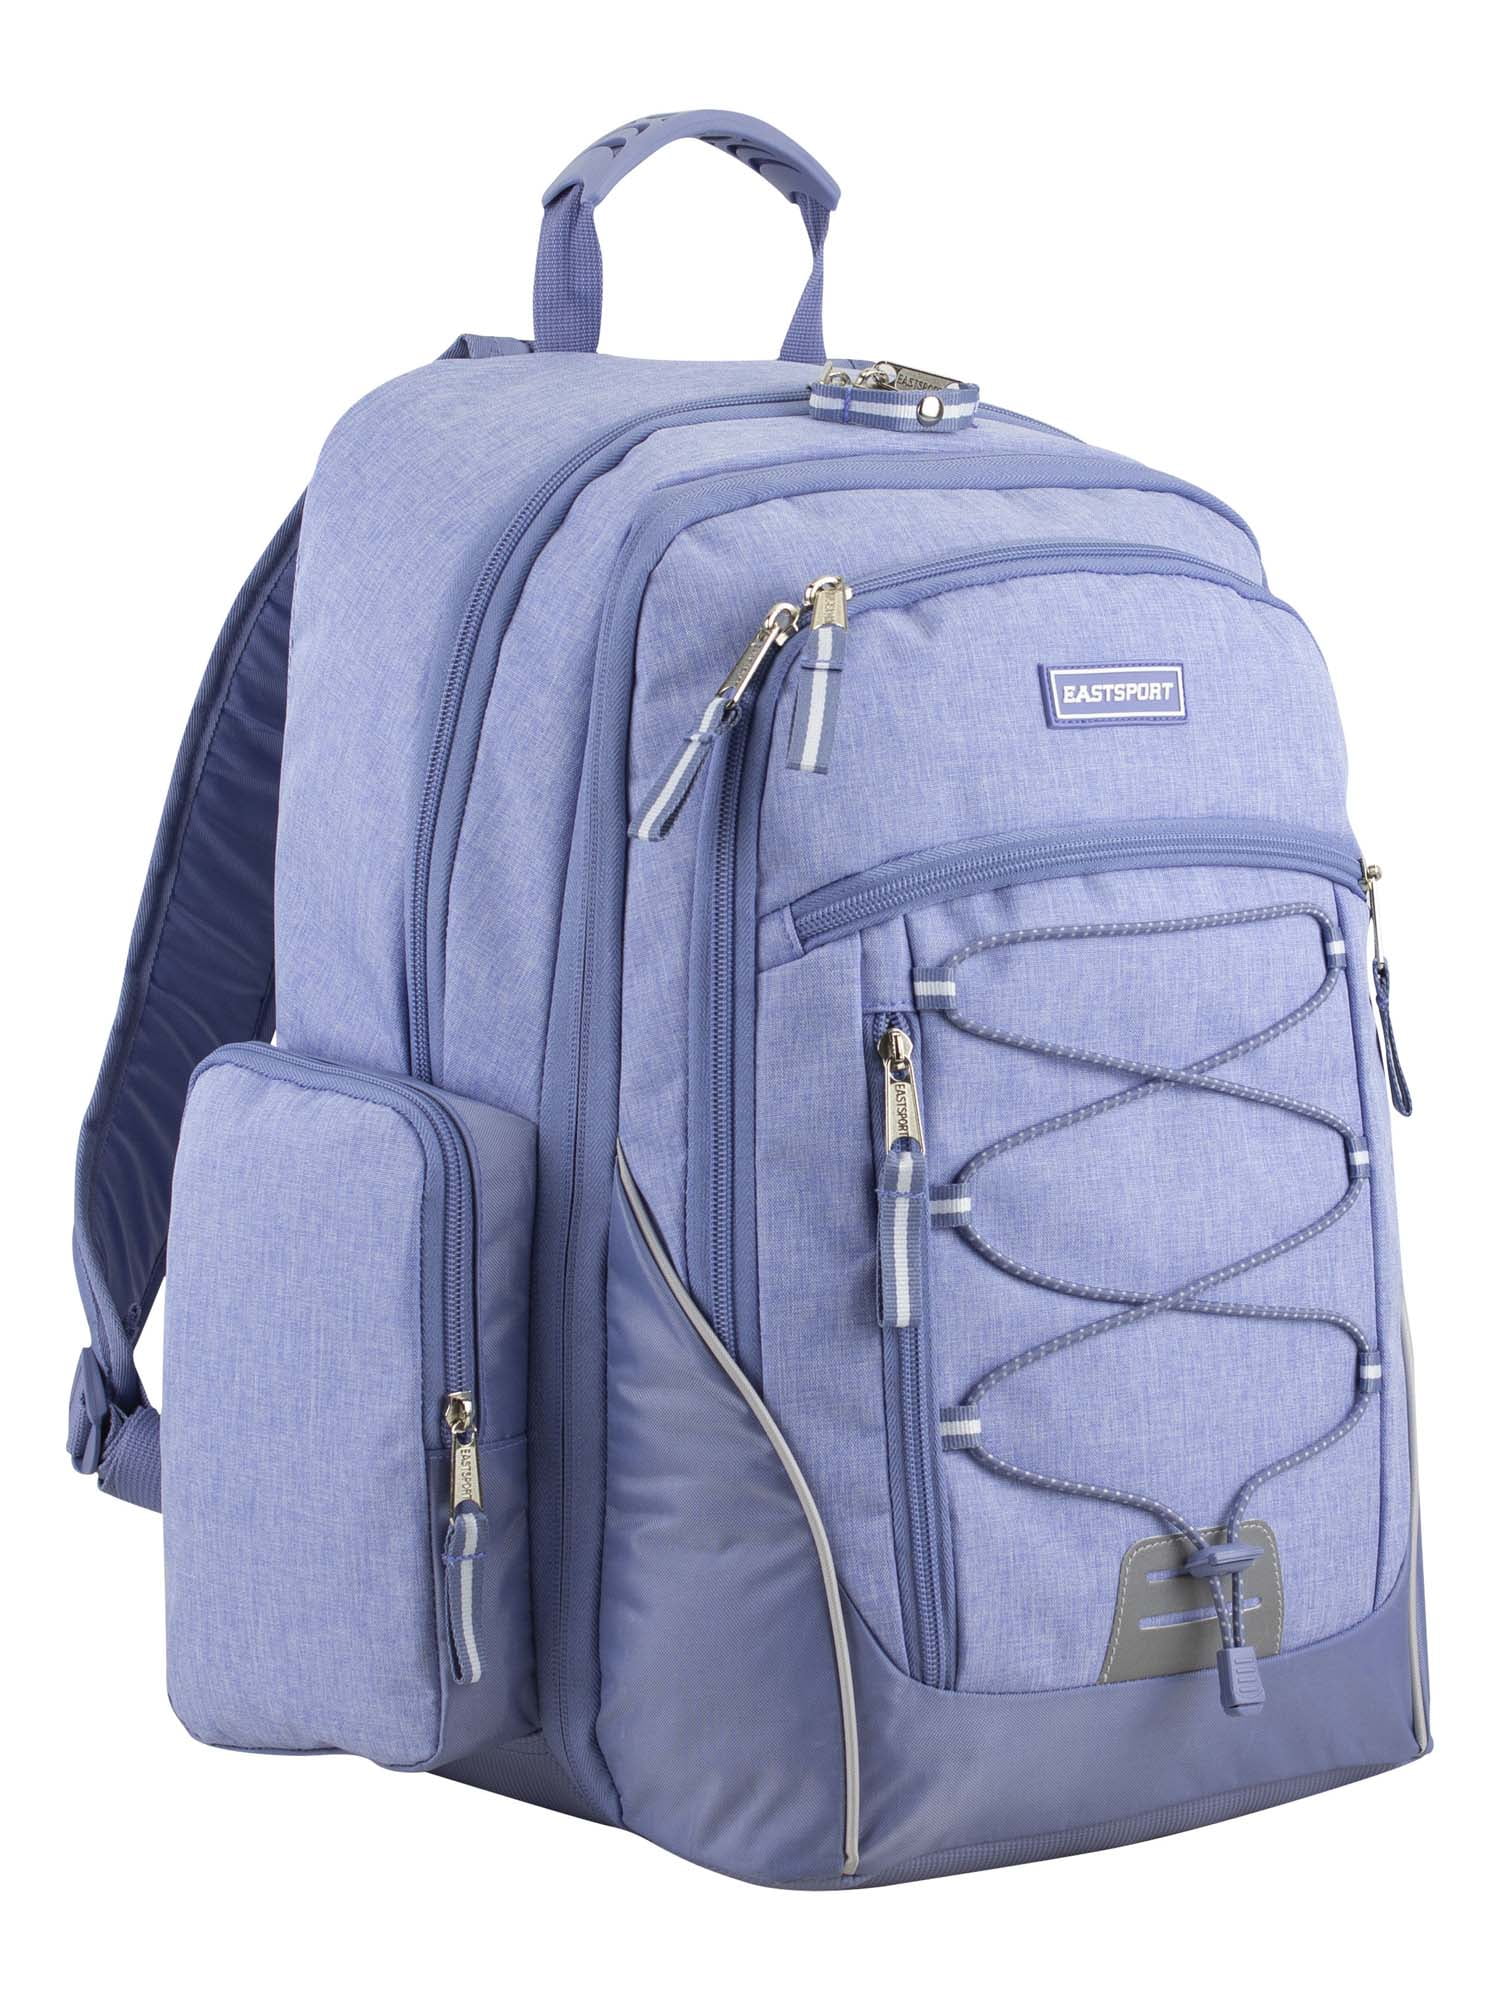 Eastsport Unisex Optimus Backpack, Baby Blue 